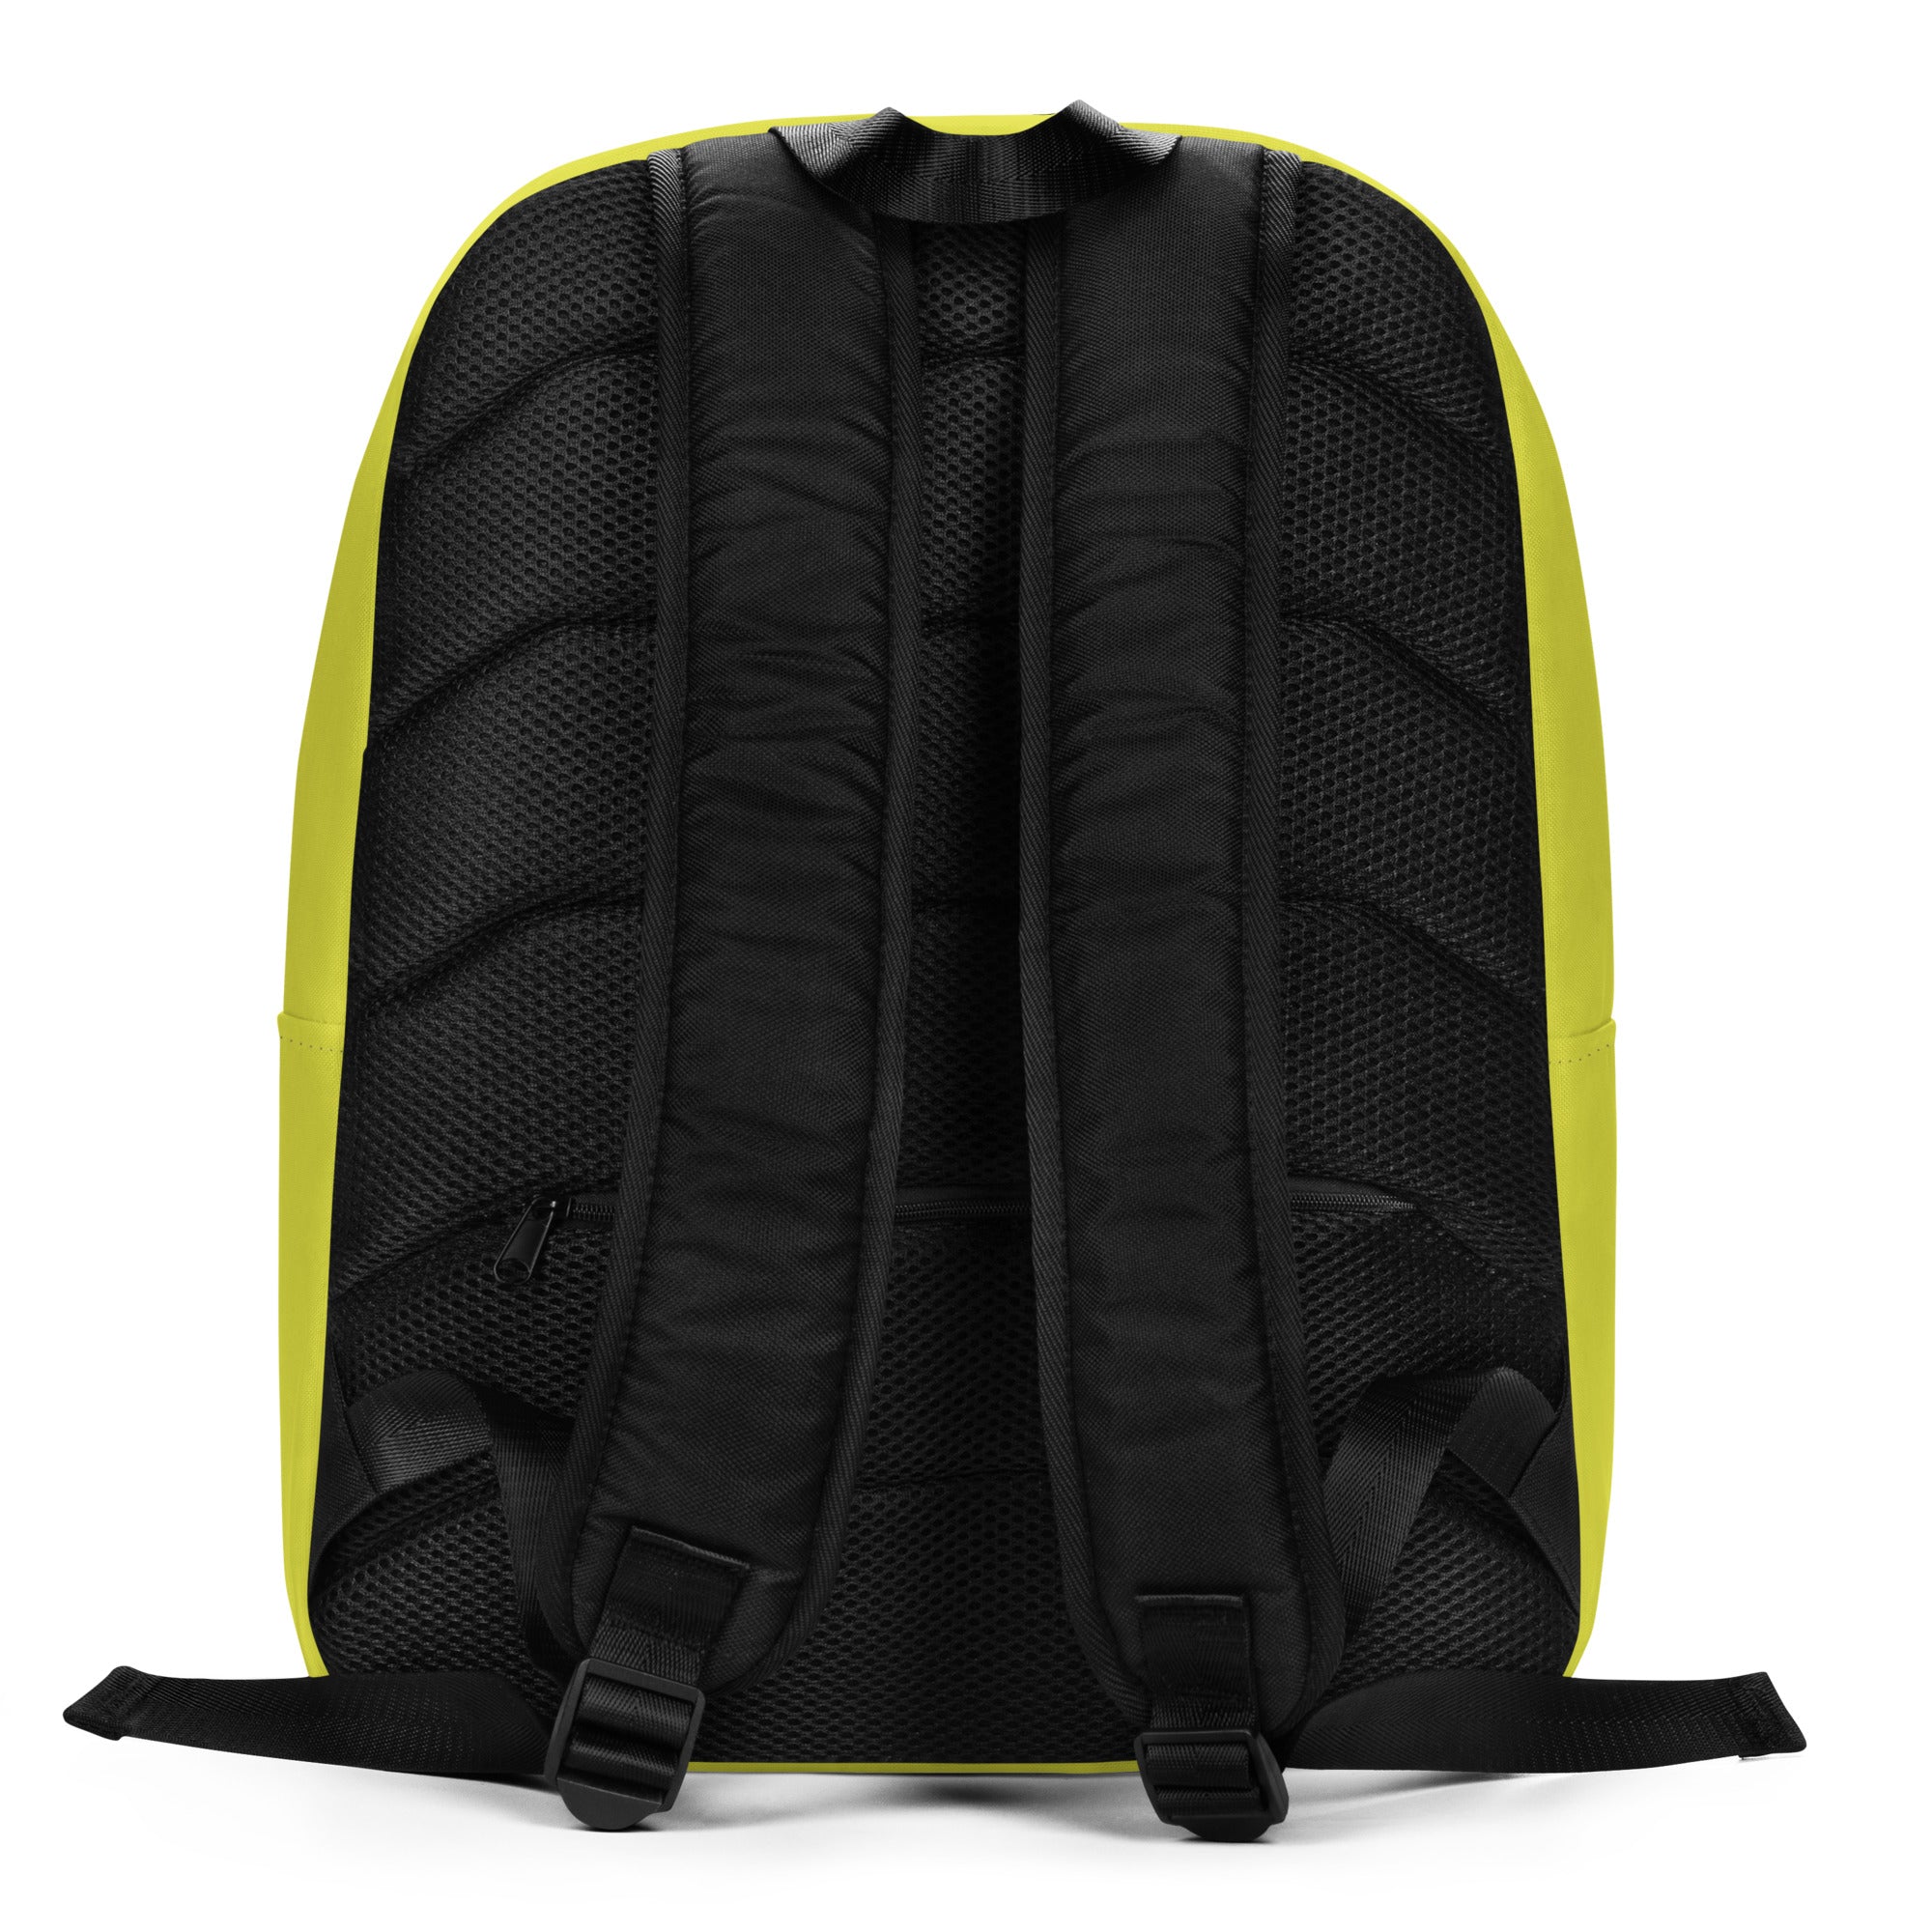 FT.GREENE Minimalist Backpack